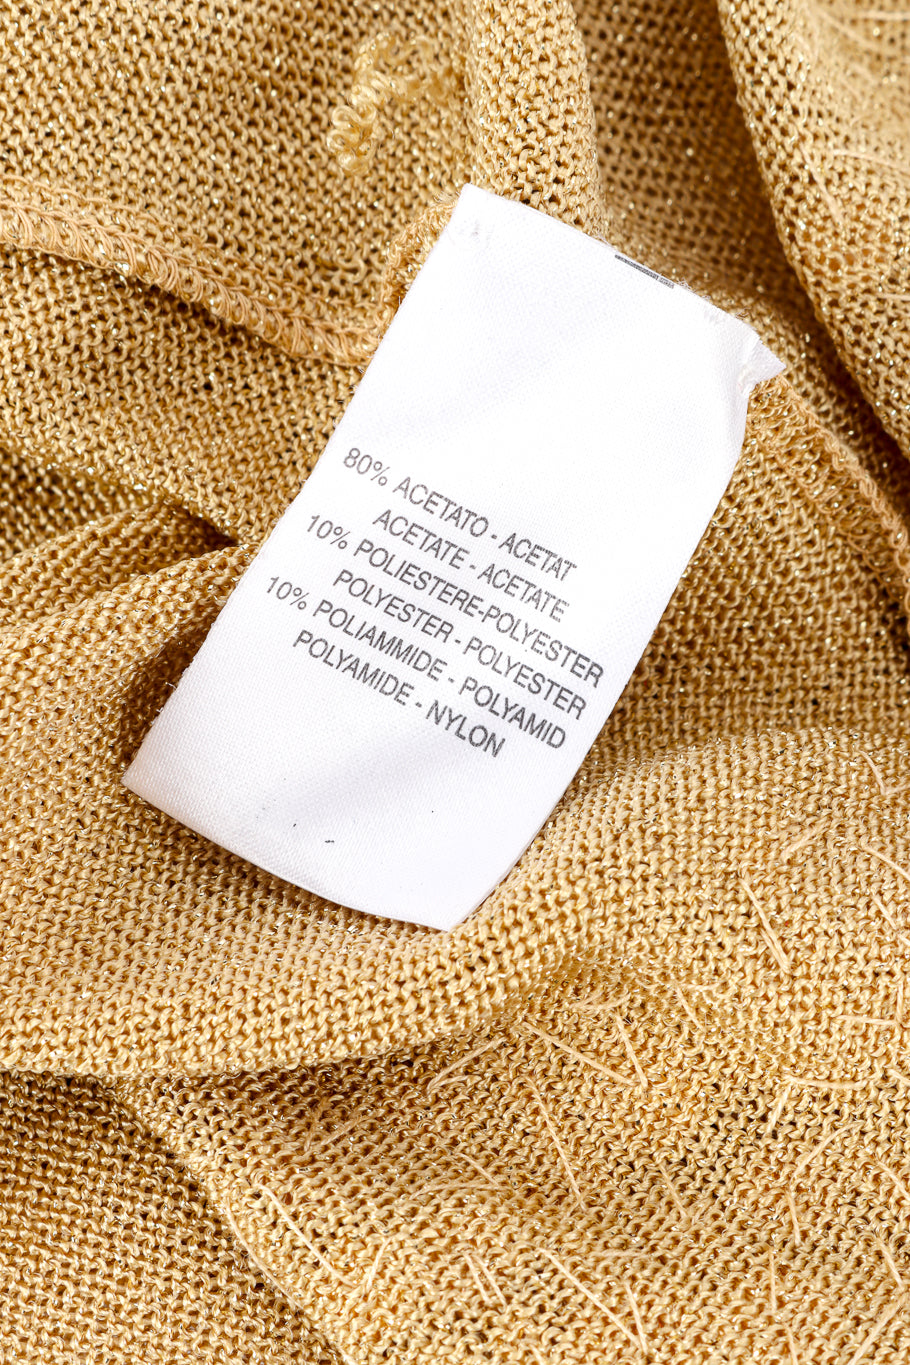 Vintage Blumarine gold sequin ruffle knit dress inside view of label of garment fabric @Recess LA